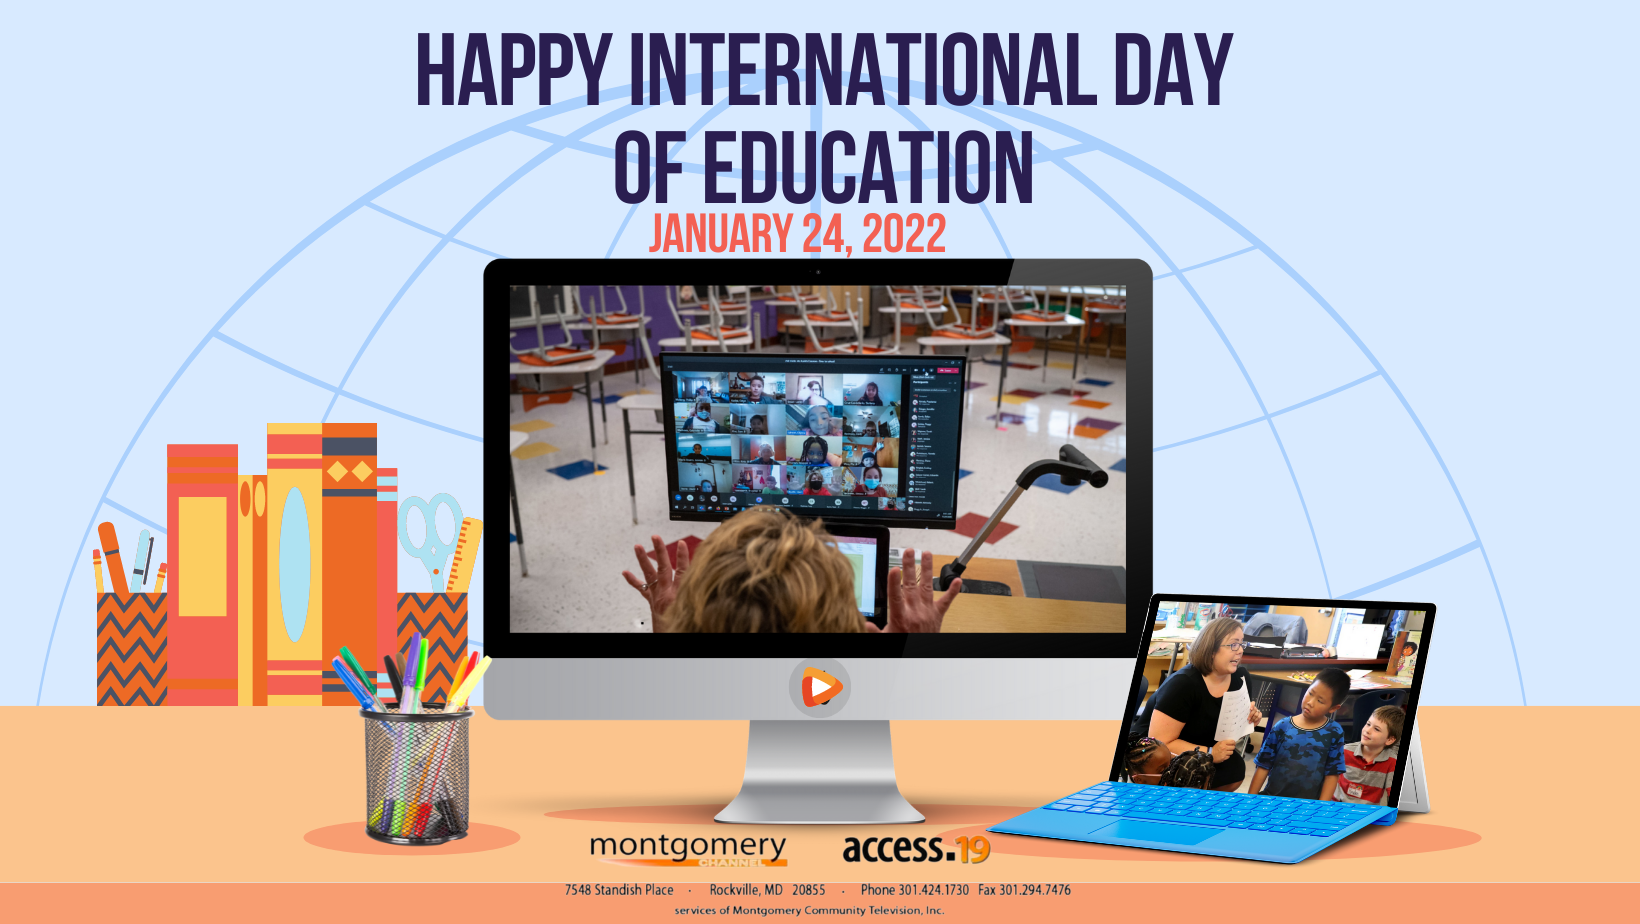 January 24 is International Education Day